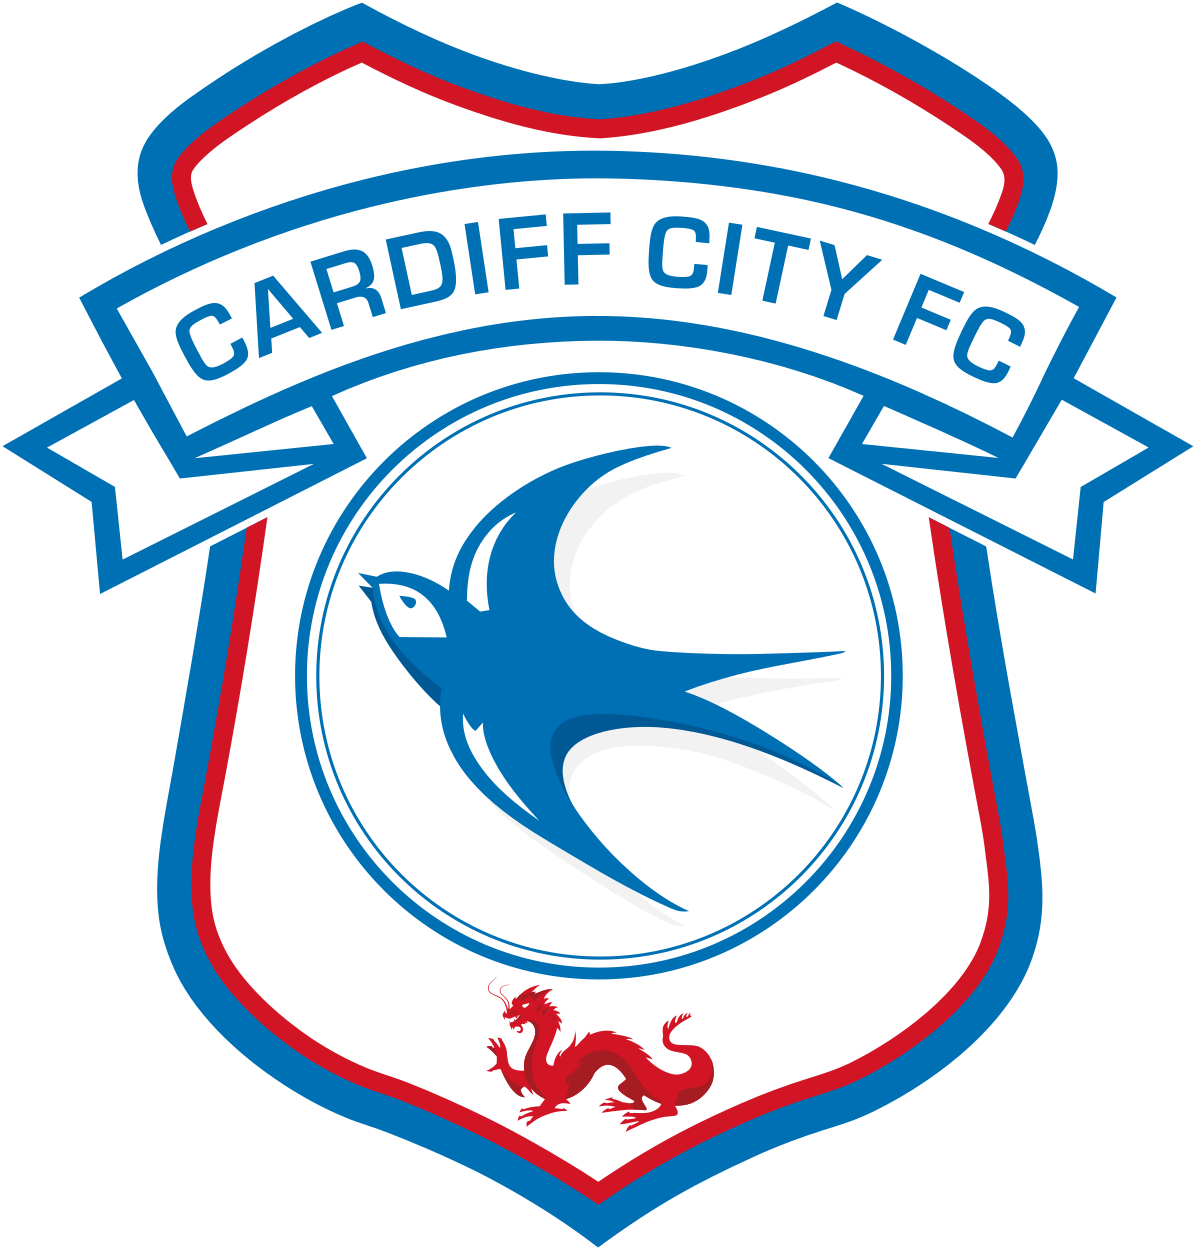 Cardiff City f c logo latar belakang Gambar PNG